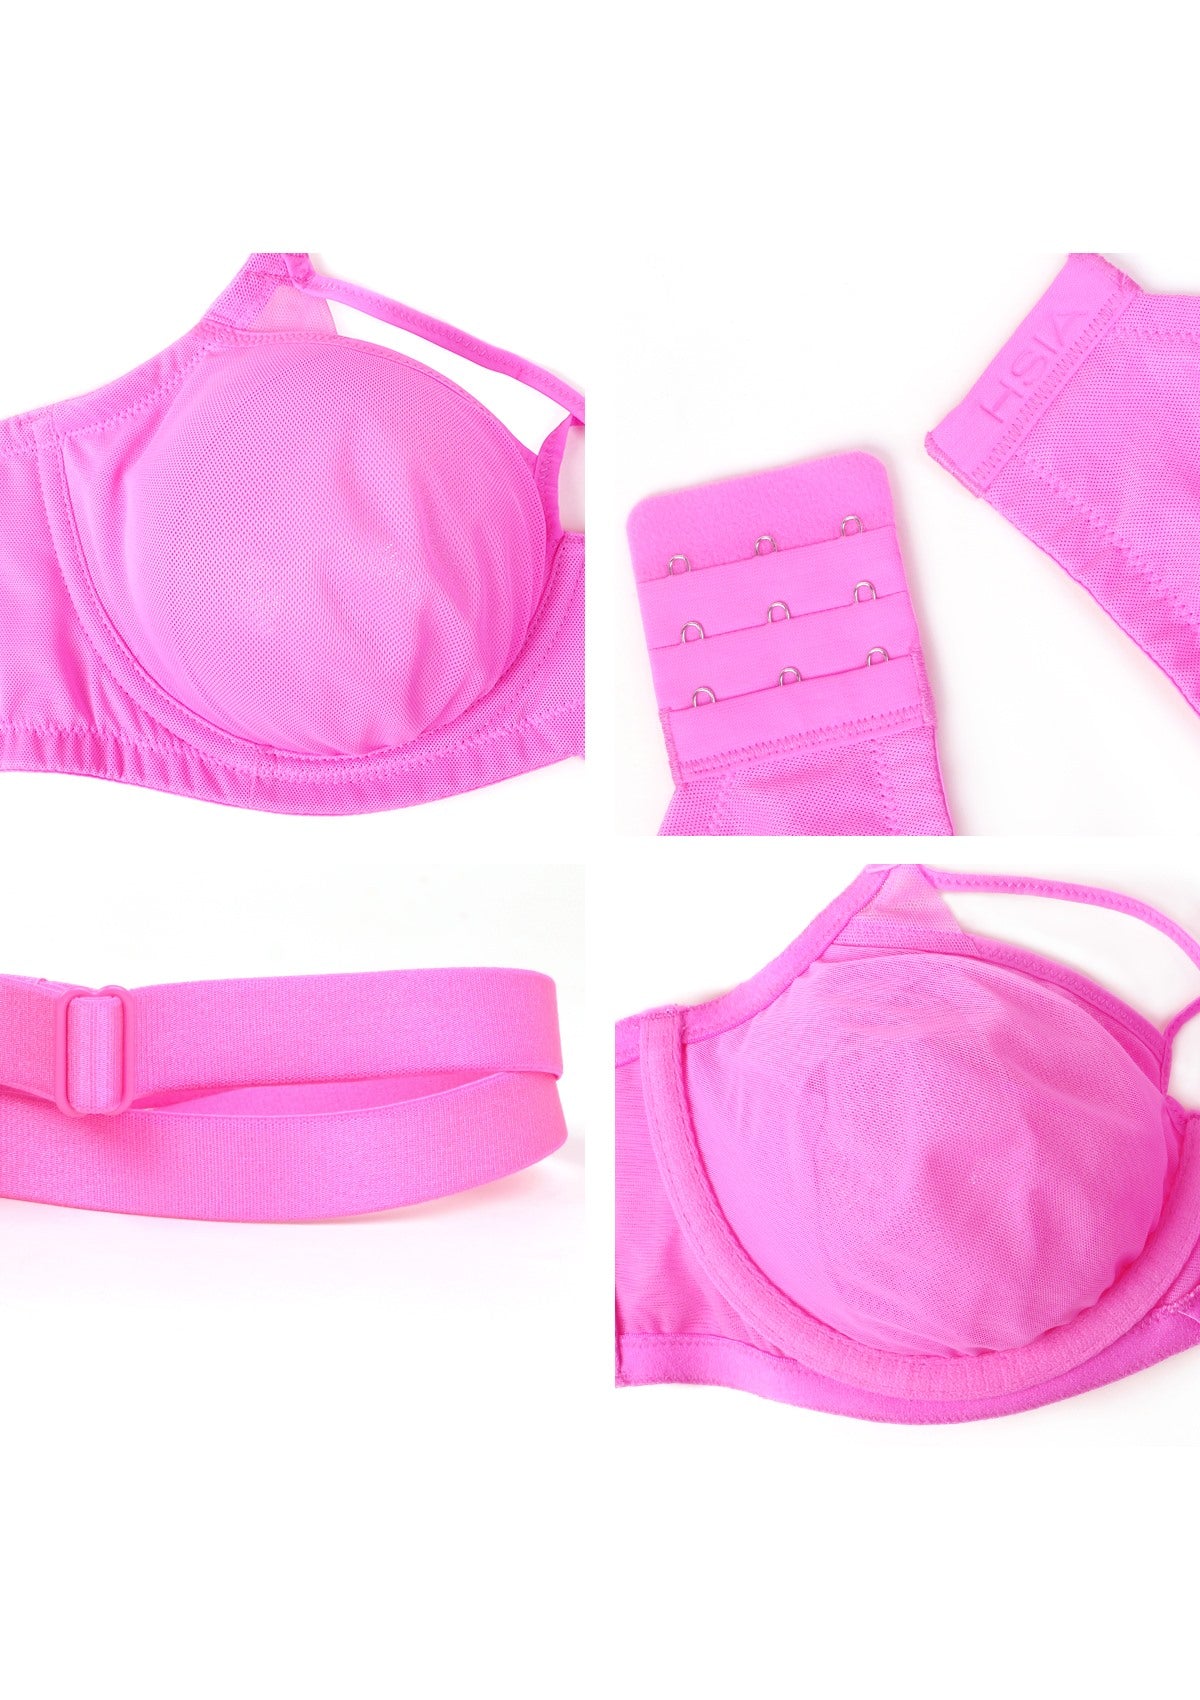 HSIA Billie Cross Front Strap Smooth Sheer Mesh Comfy Underwire Bra - Barbie Pink / 38 / H